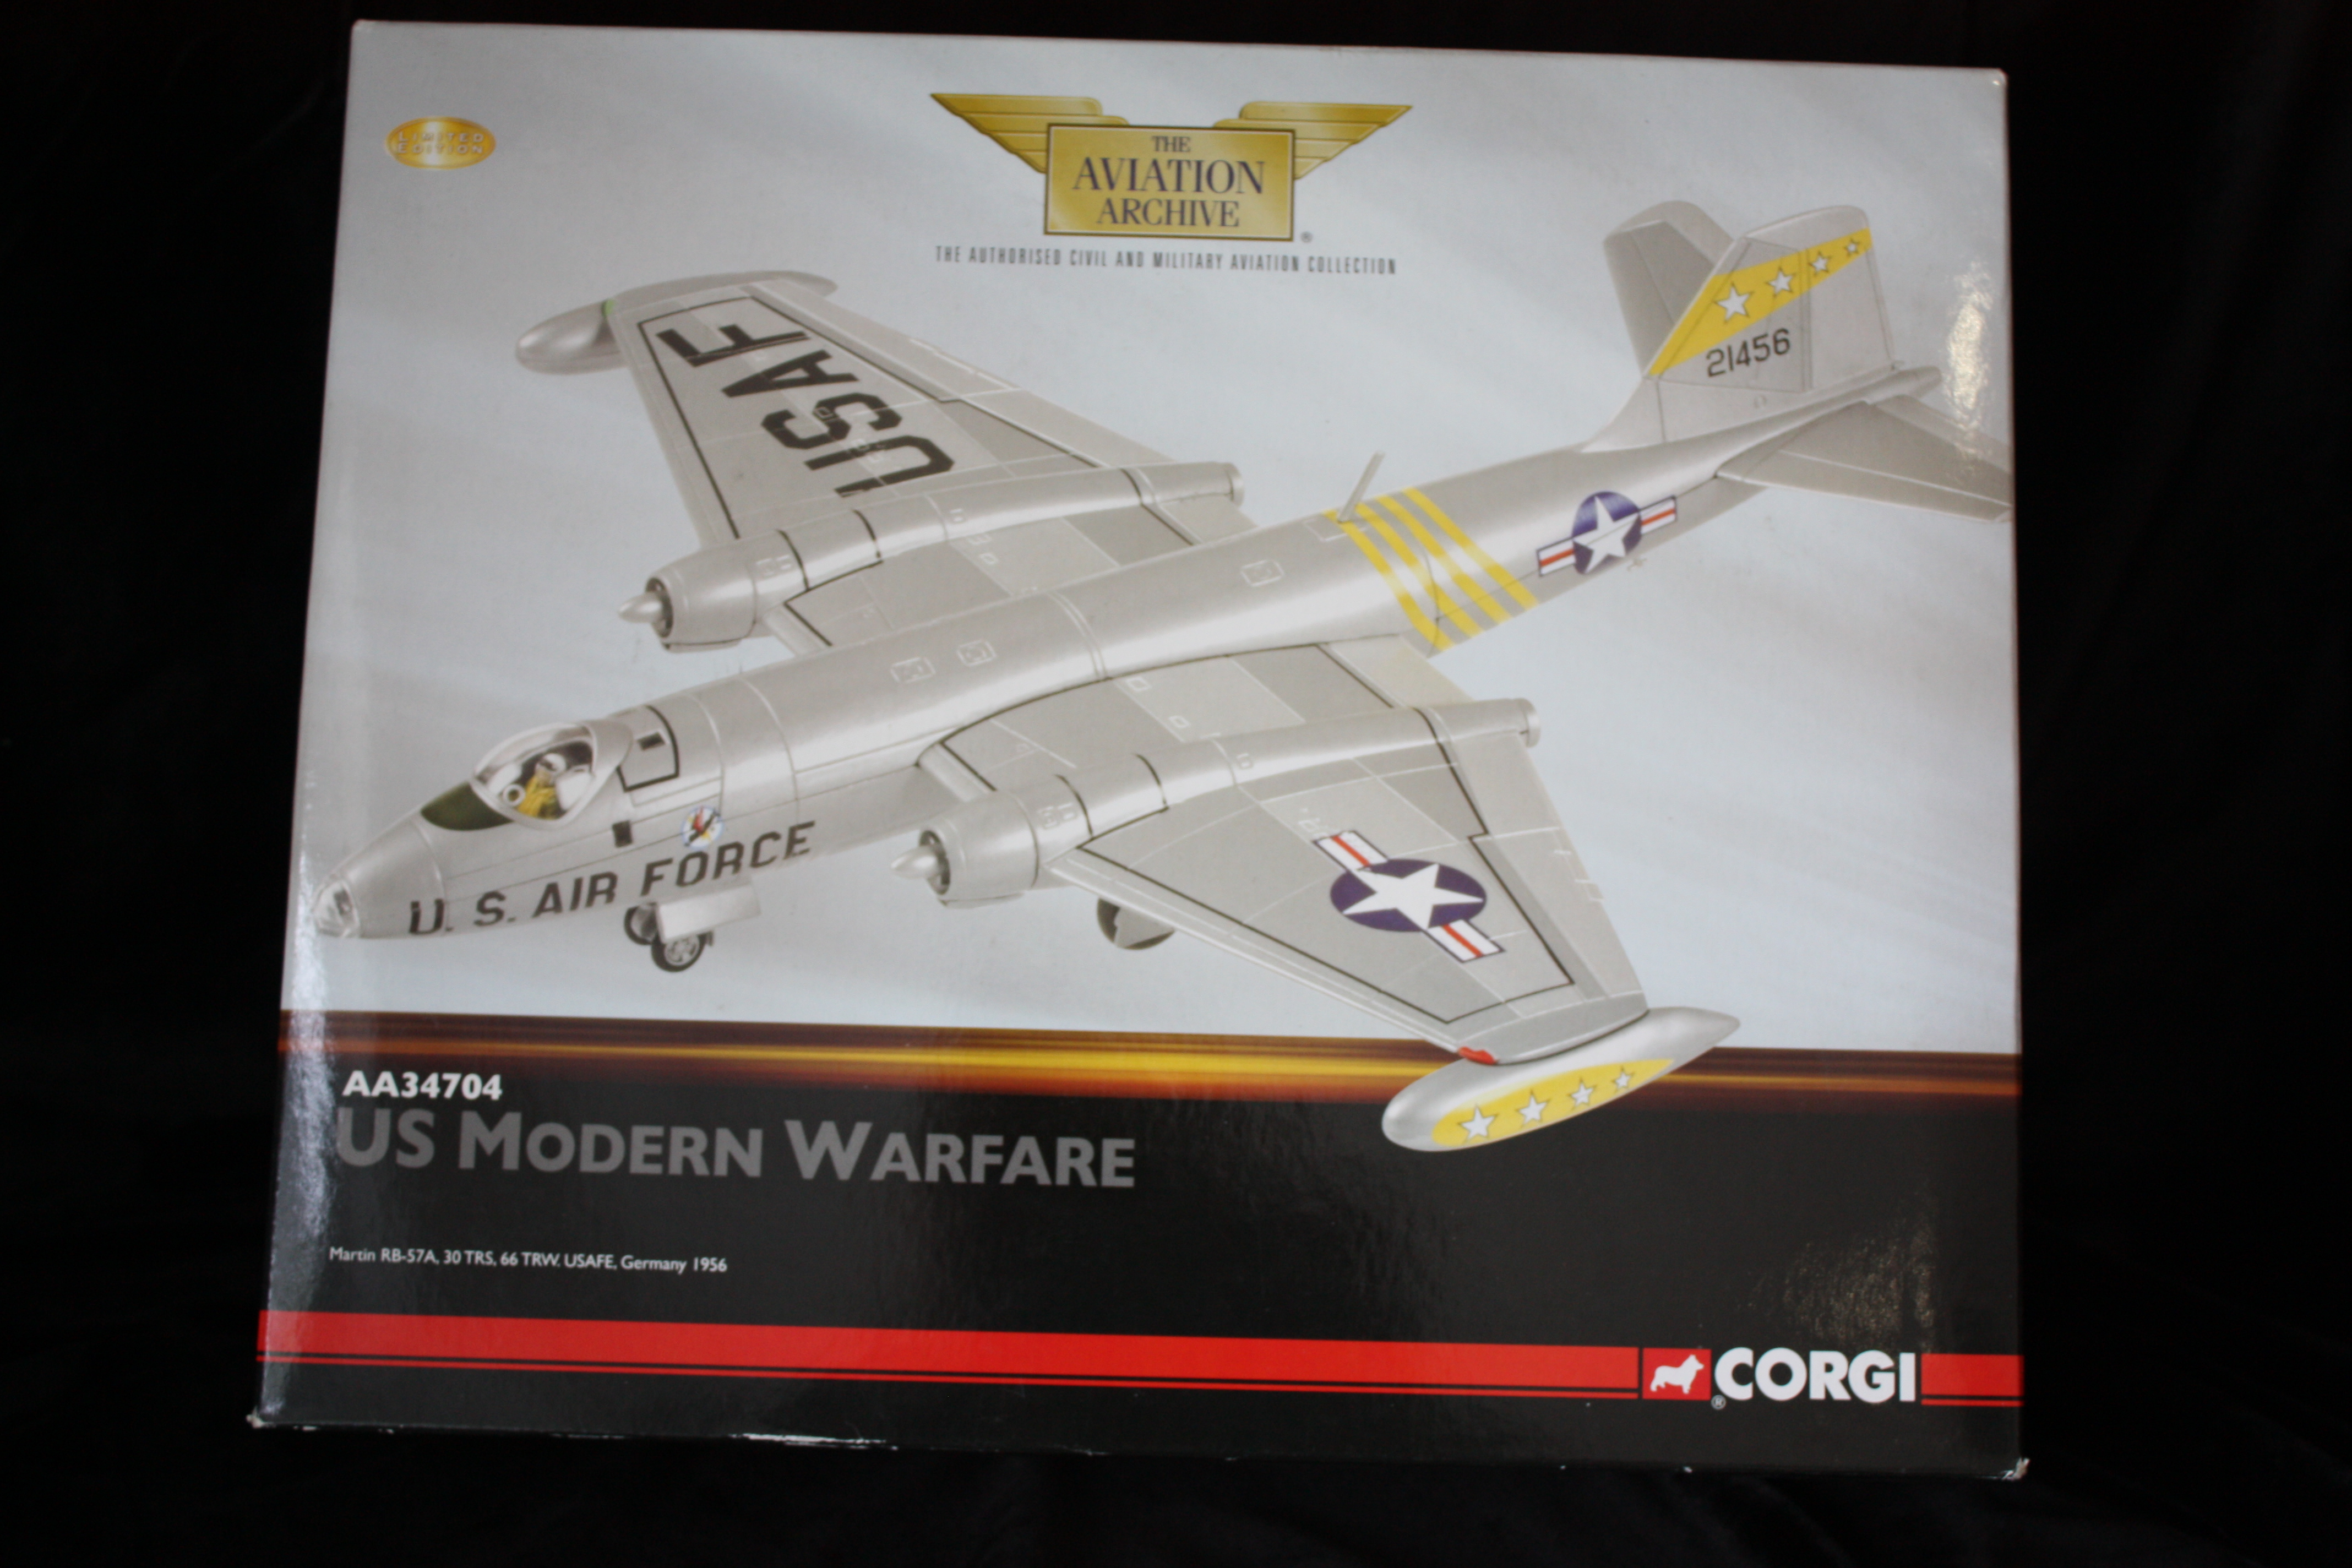 Corgi "Aviation Archive" USAF Martin RB57 Canberra 1:72 Scale Collectors Model